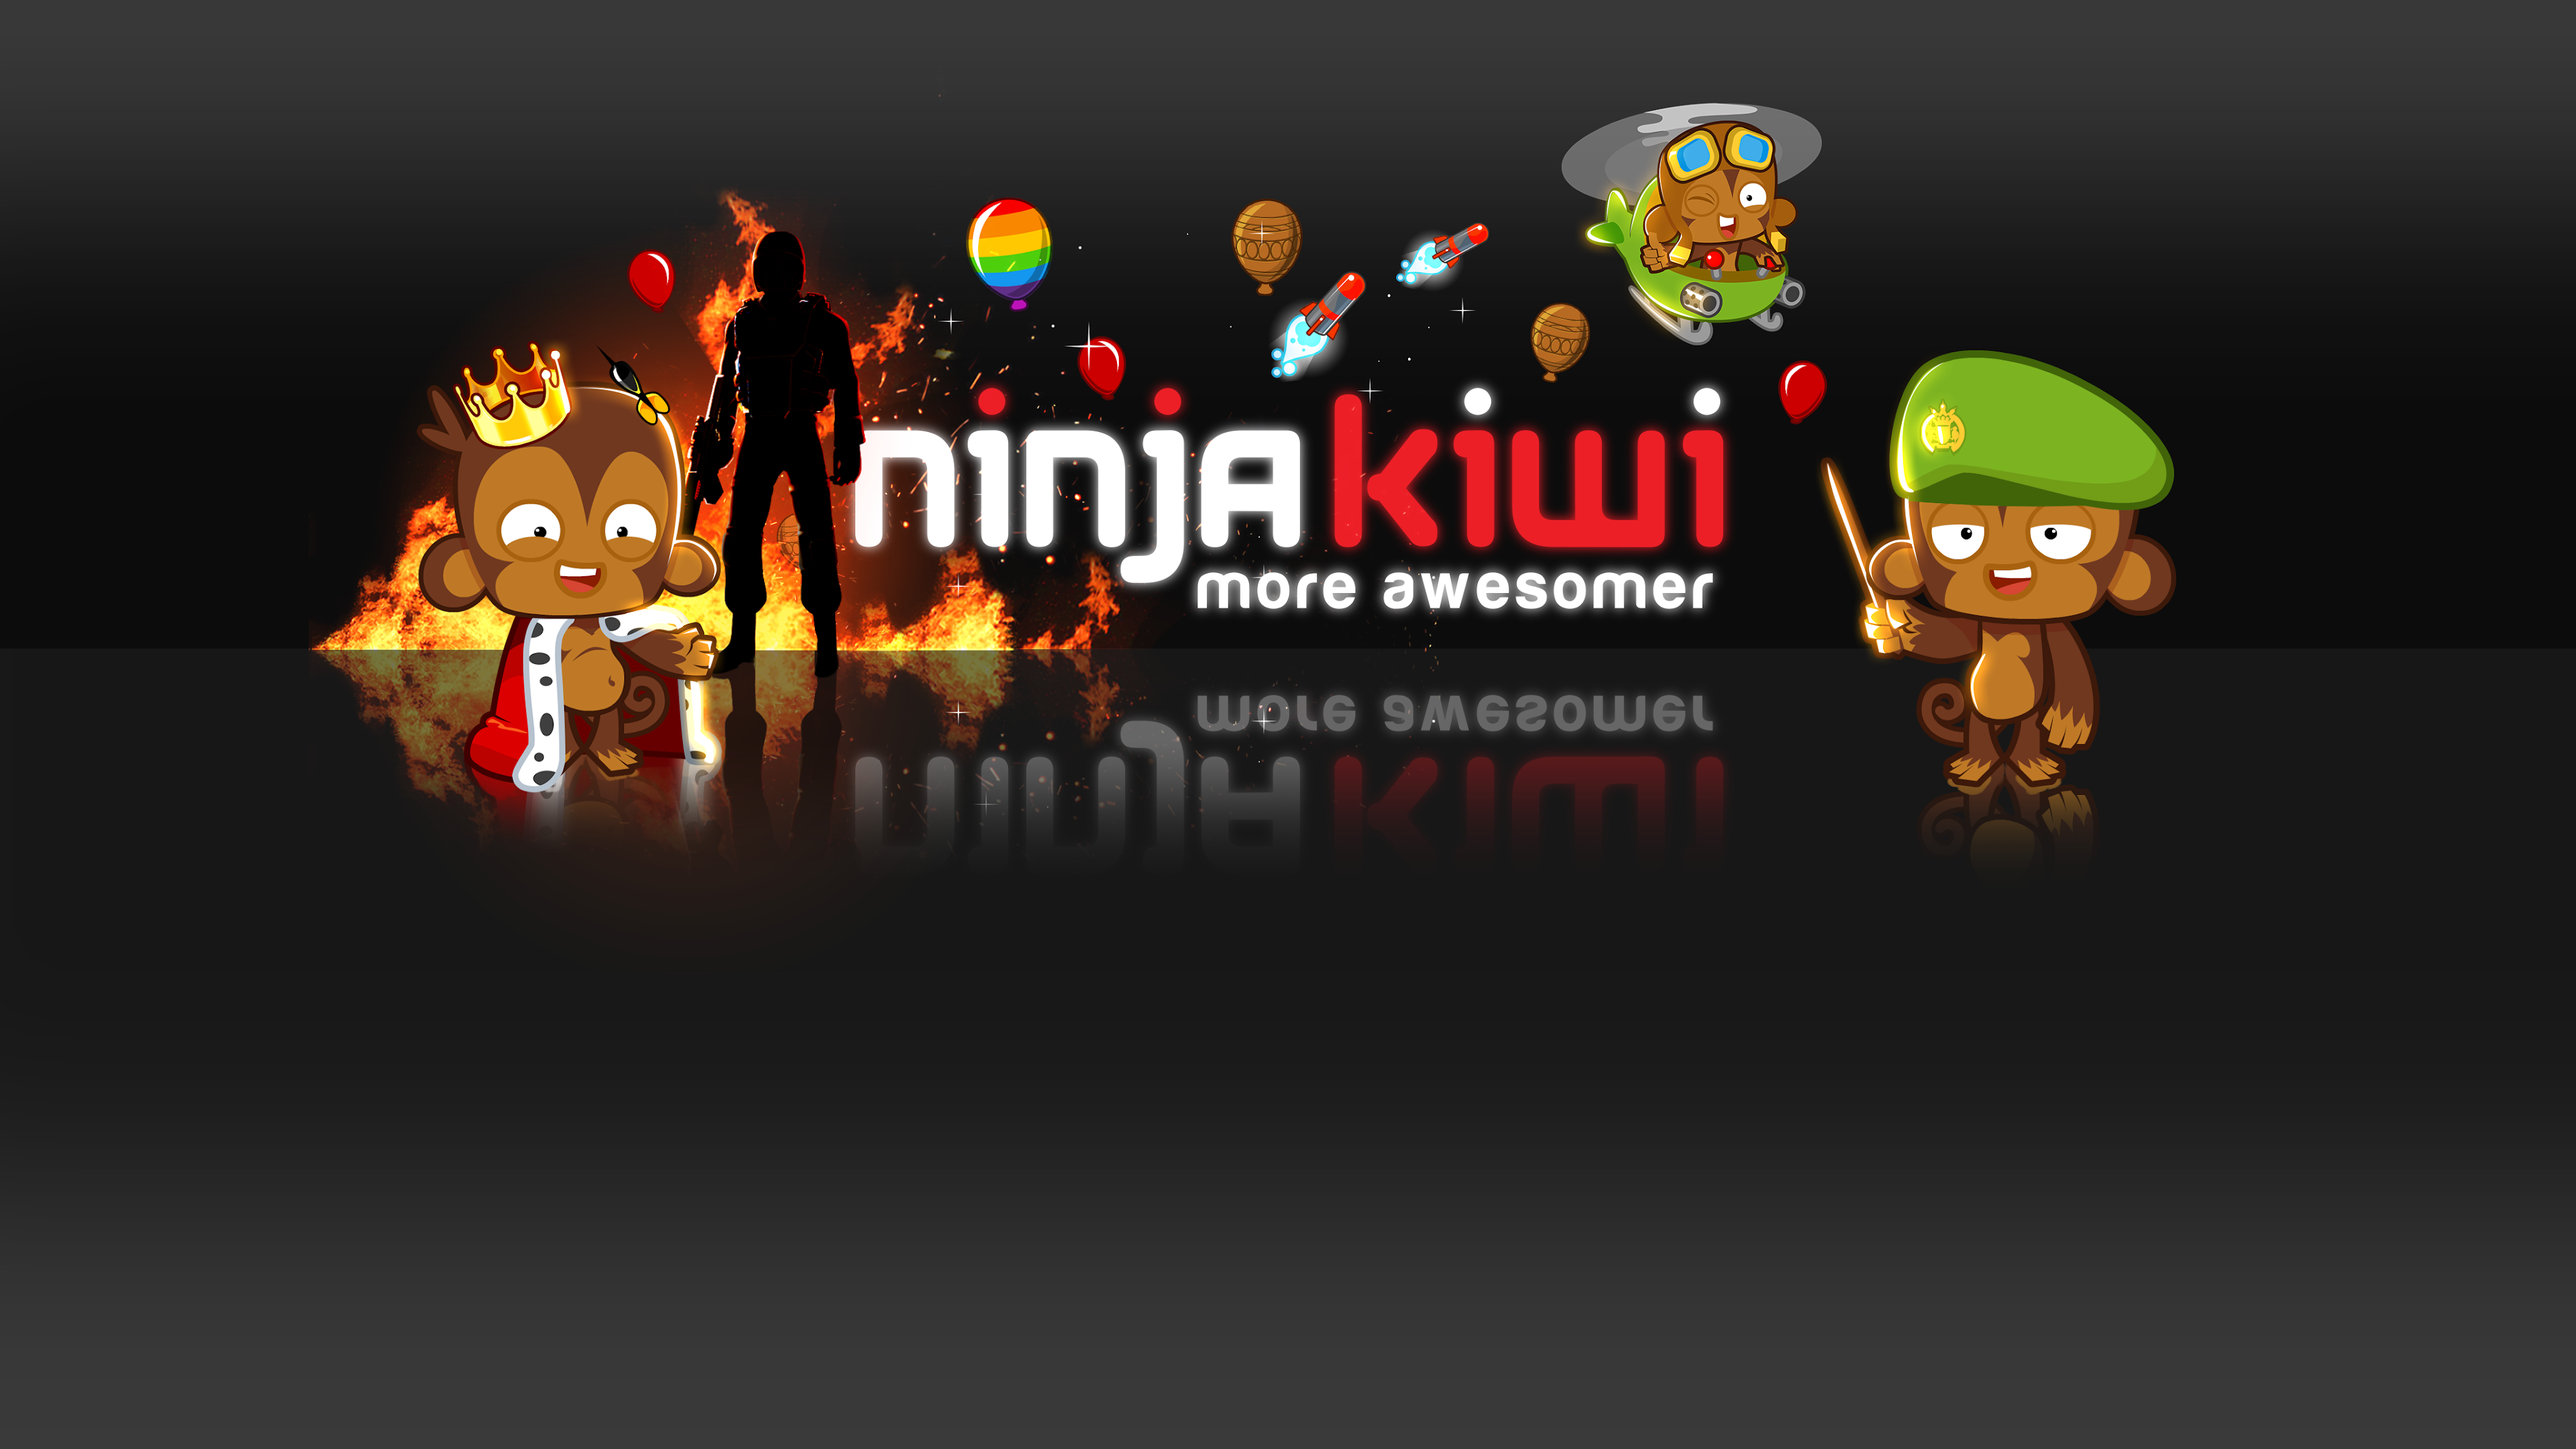 Ninja Kiwi - Free Online Games, Mobile Games & Tower Defense Games